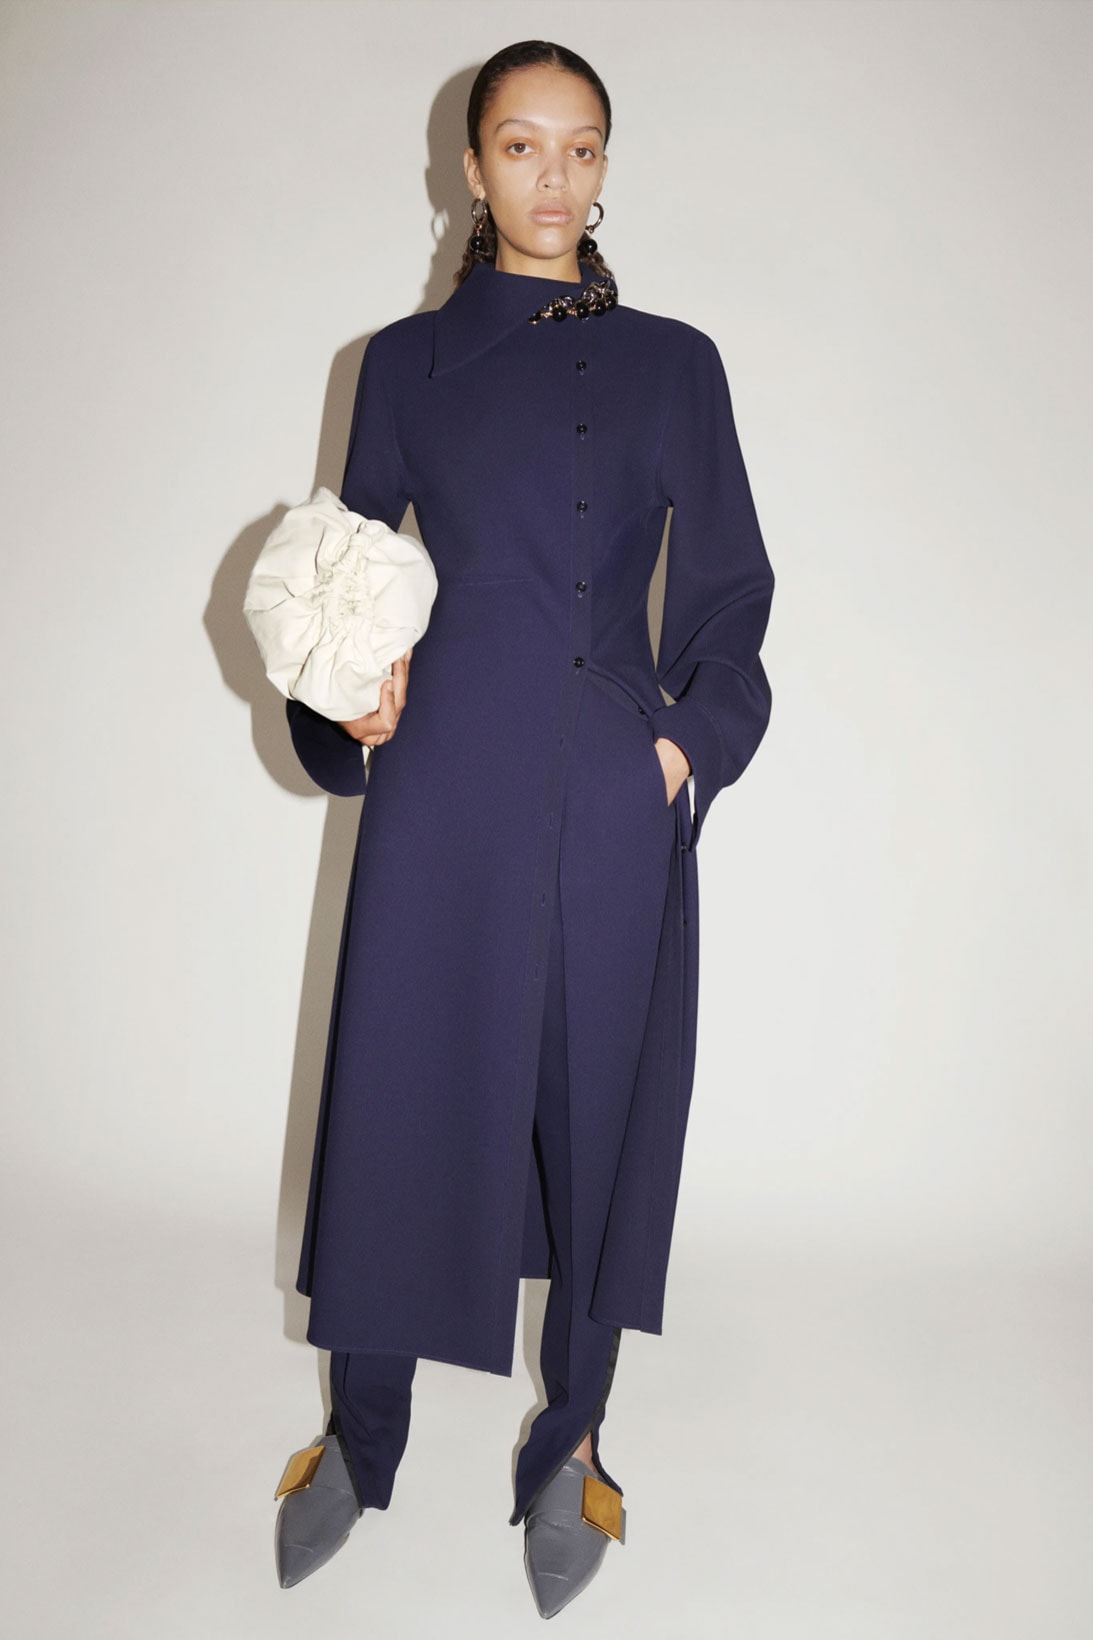 jil sander pre-fall 2021 collection suits minimal oversized blazers jackets dresses lucie luke meier